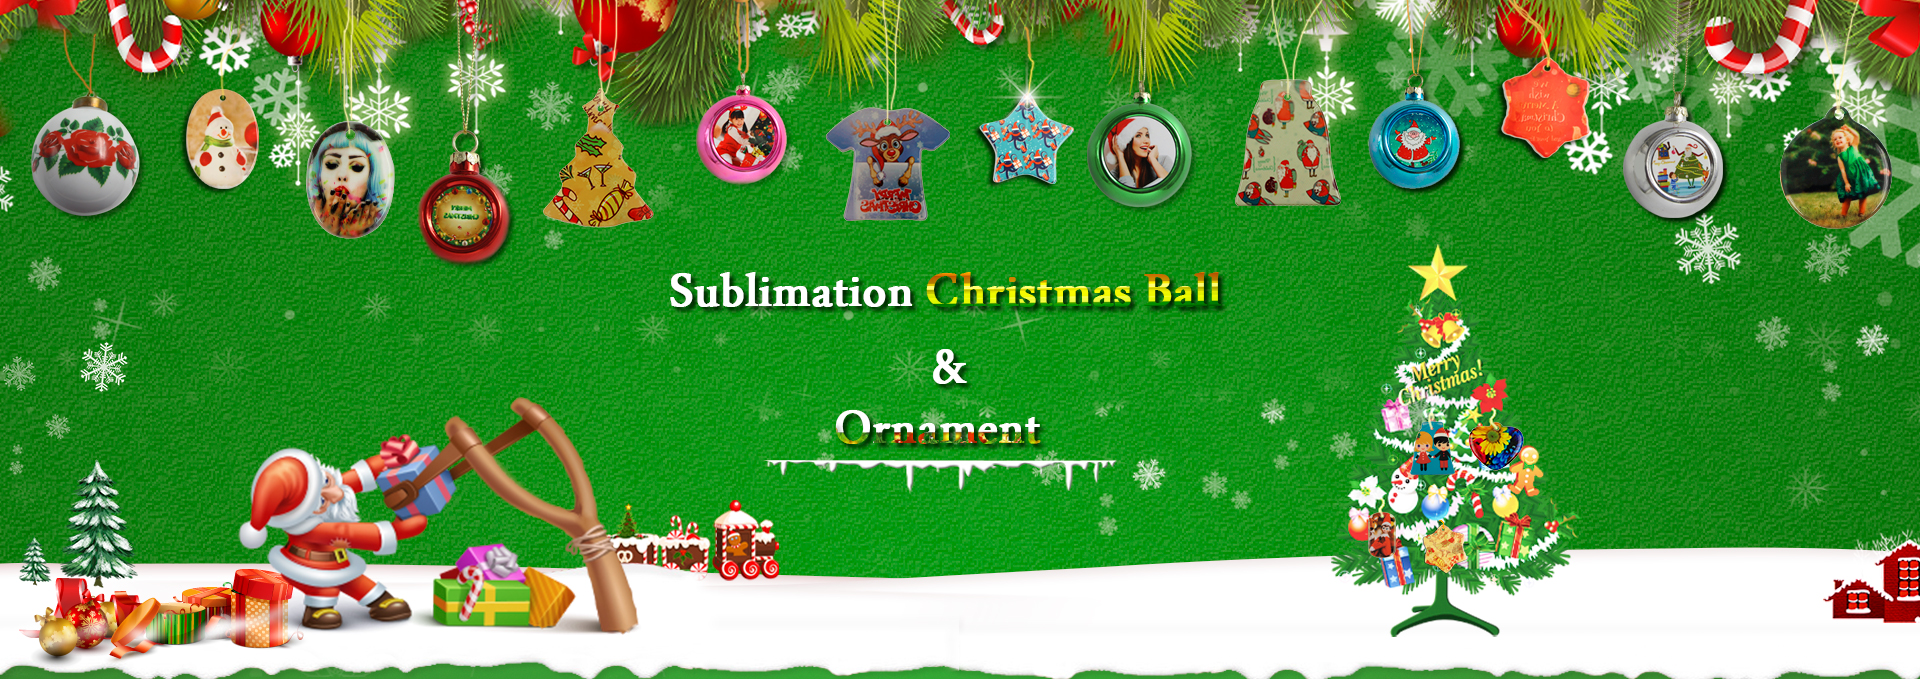 Sublimation Christmas Ball and Ornament